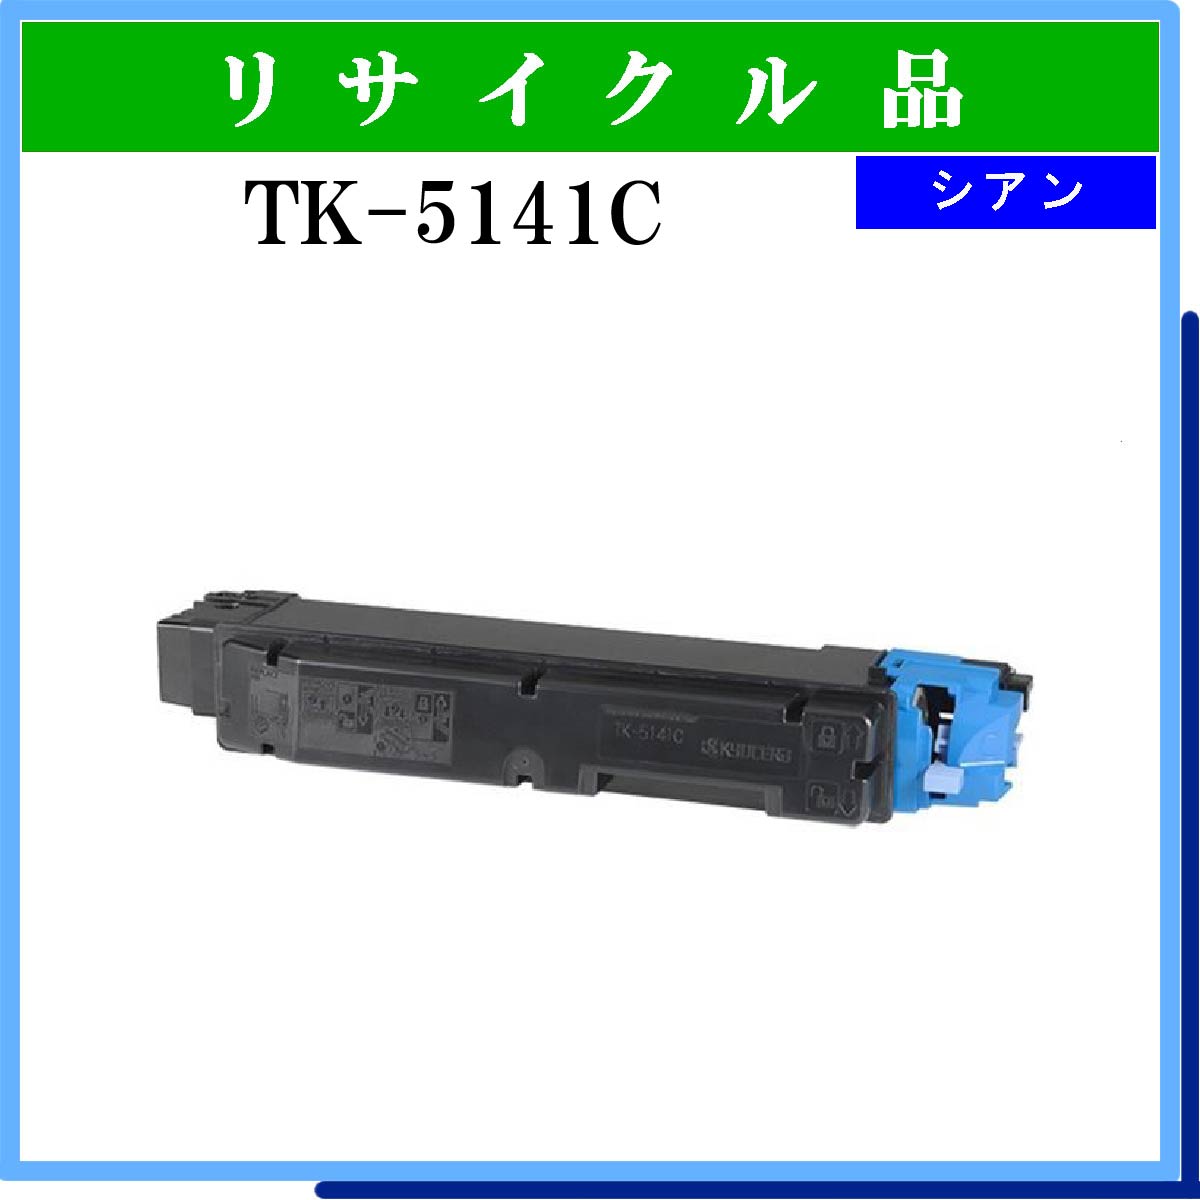 TK-5141C - ウインドウを閉じる